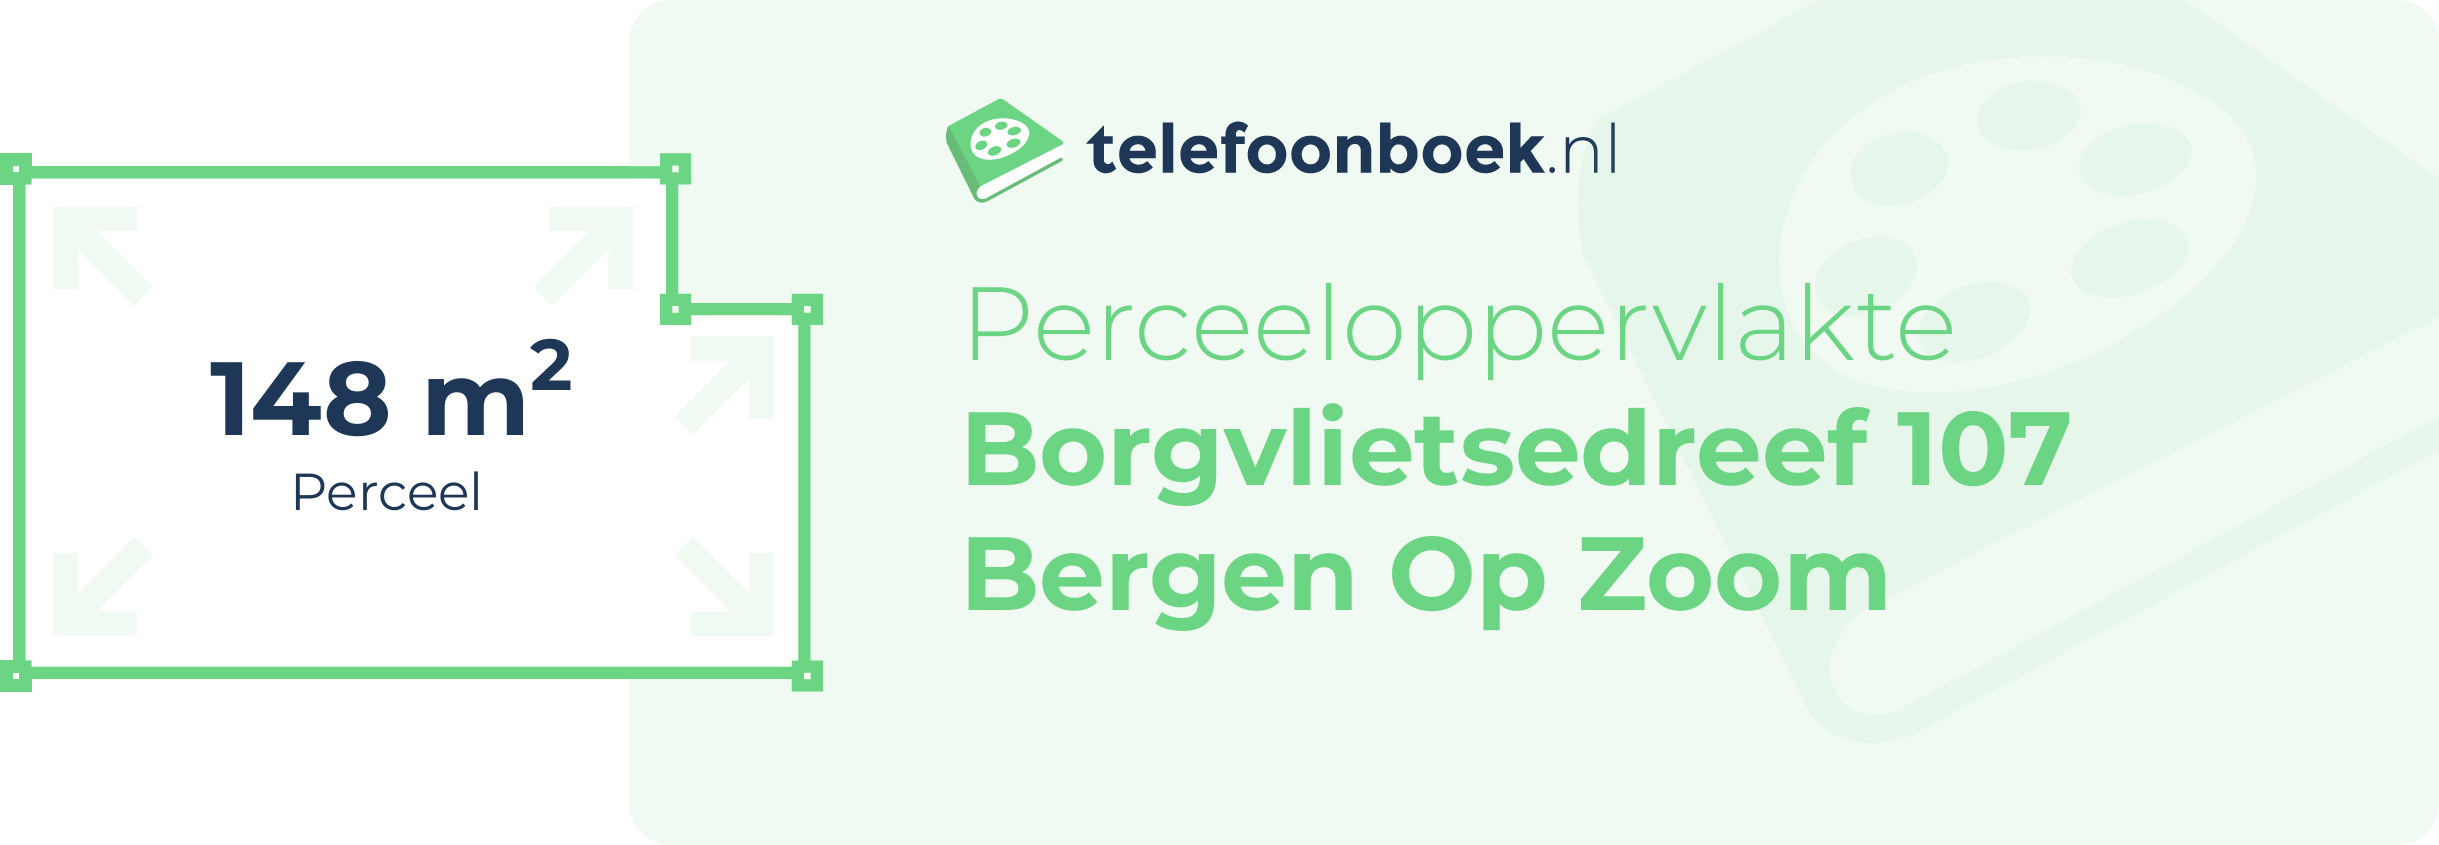 Perceeloppervlakte Borgvlietsedreef 107 Bergen Op Zoom